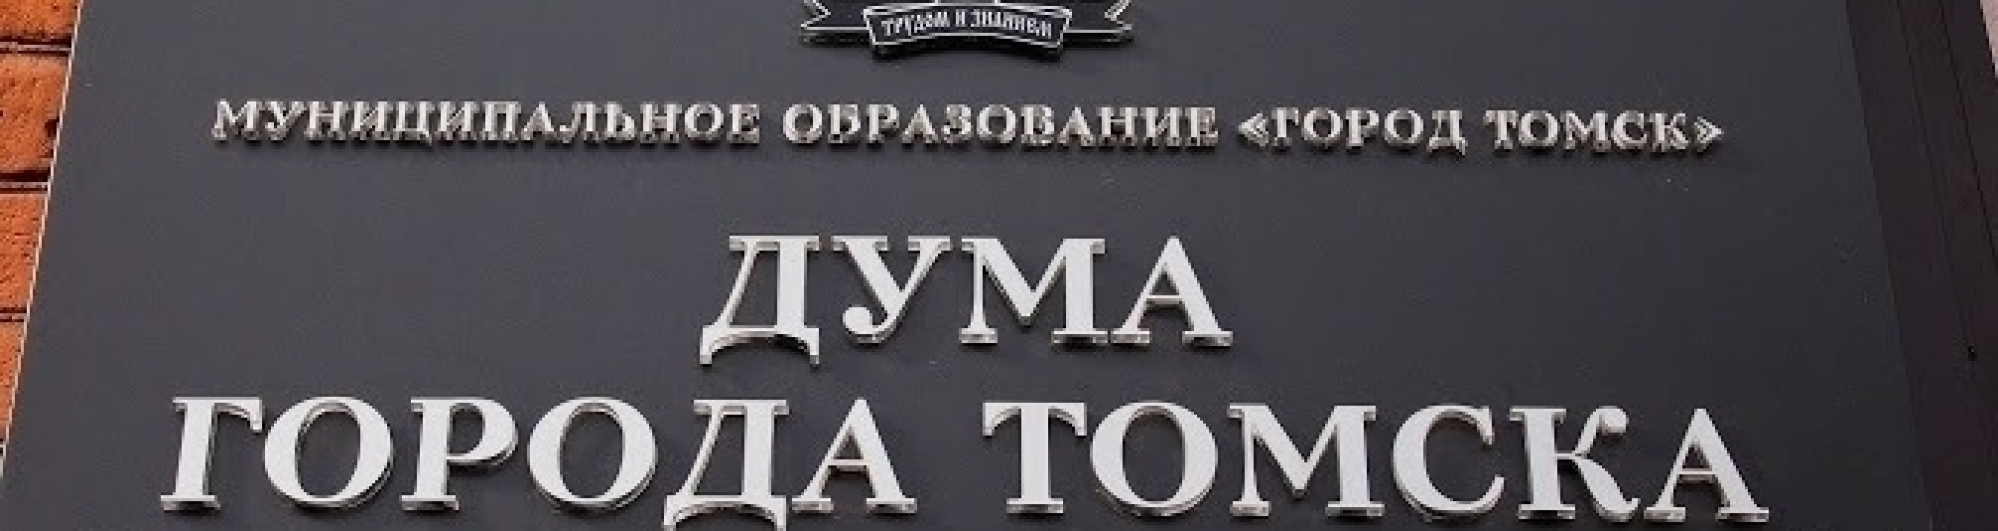 Назначена дата публичных слушаний по корректировкам Устава Томска